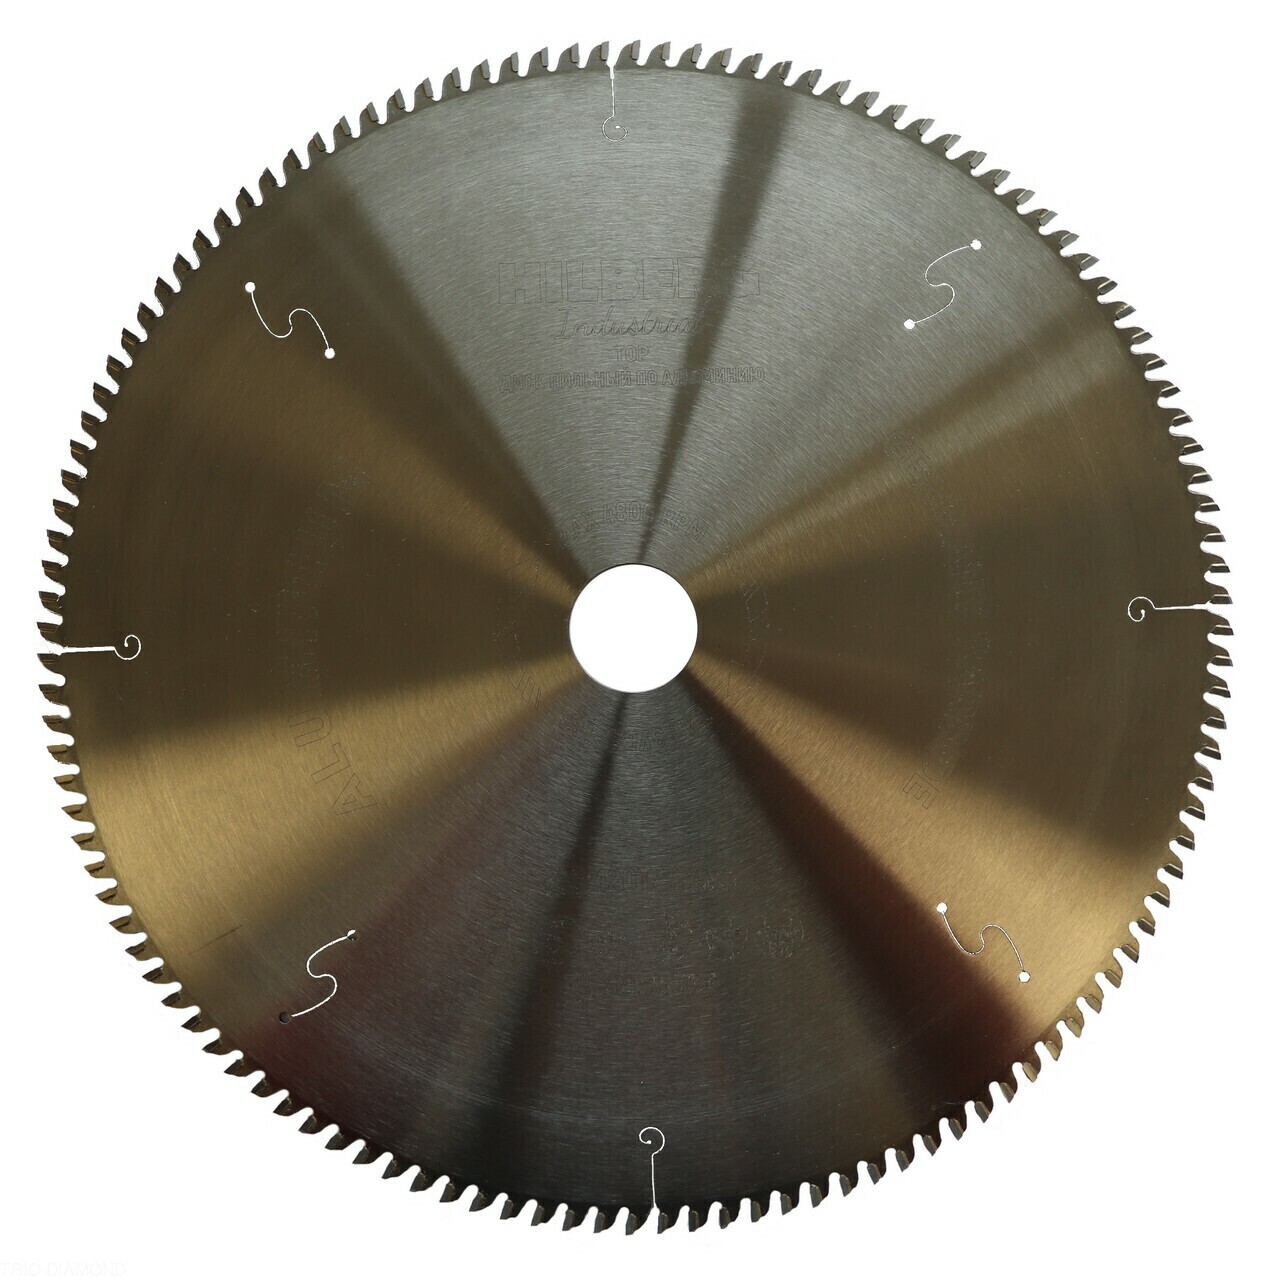 Пильный диск Hilberg Industrial Aluminium TOP 305 мм, артикул 